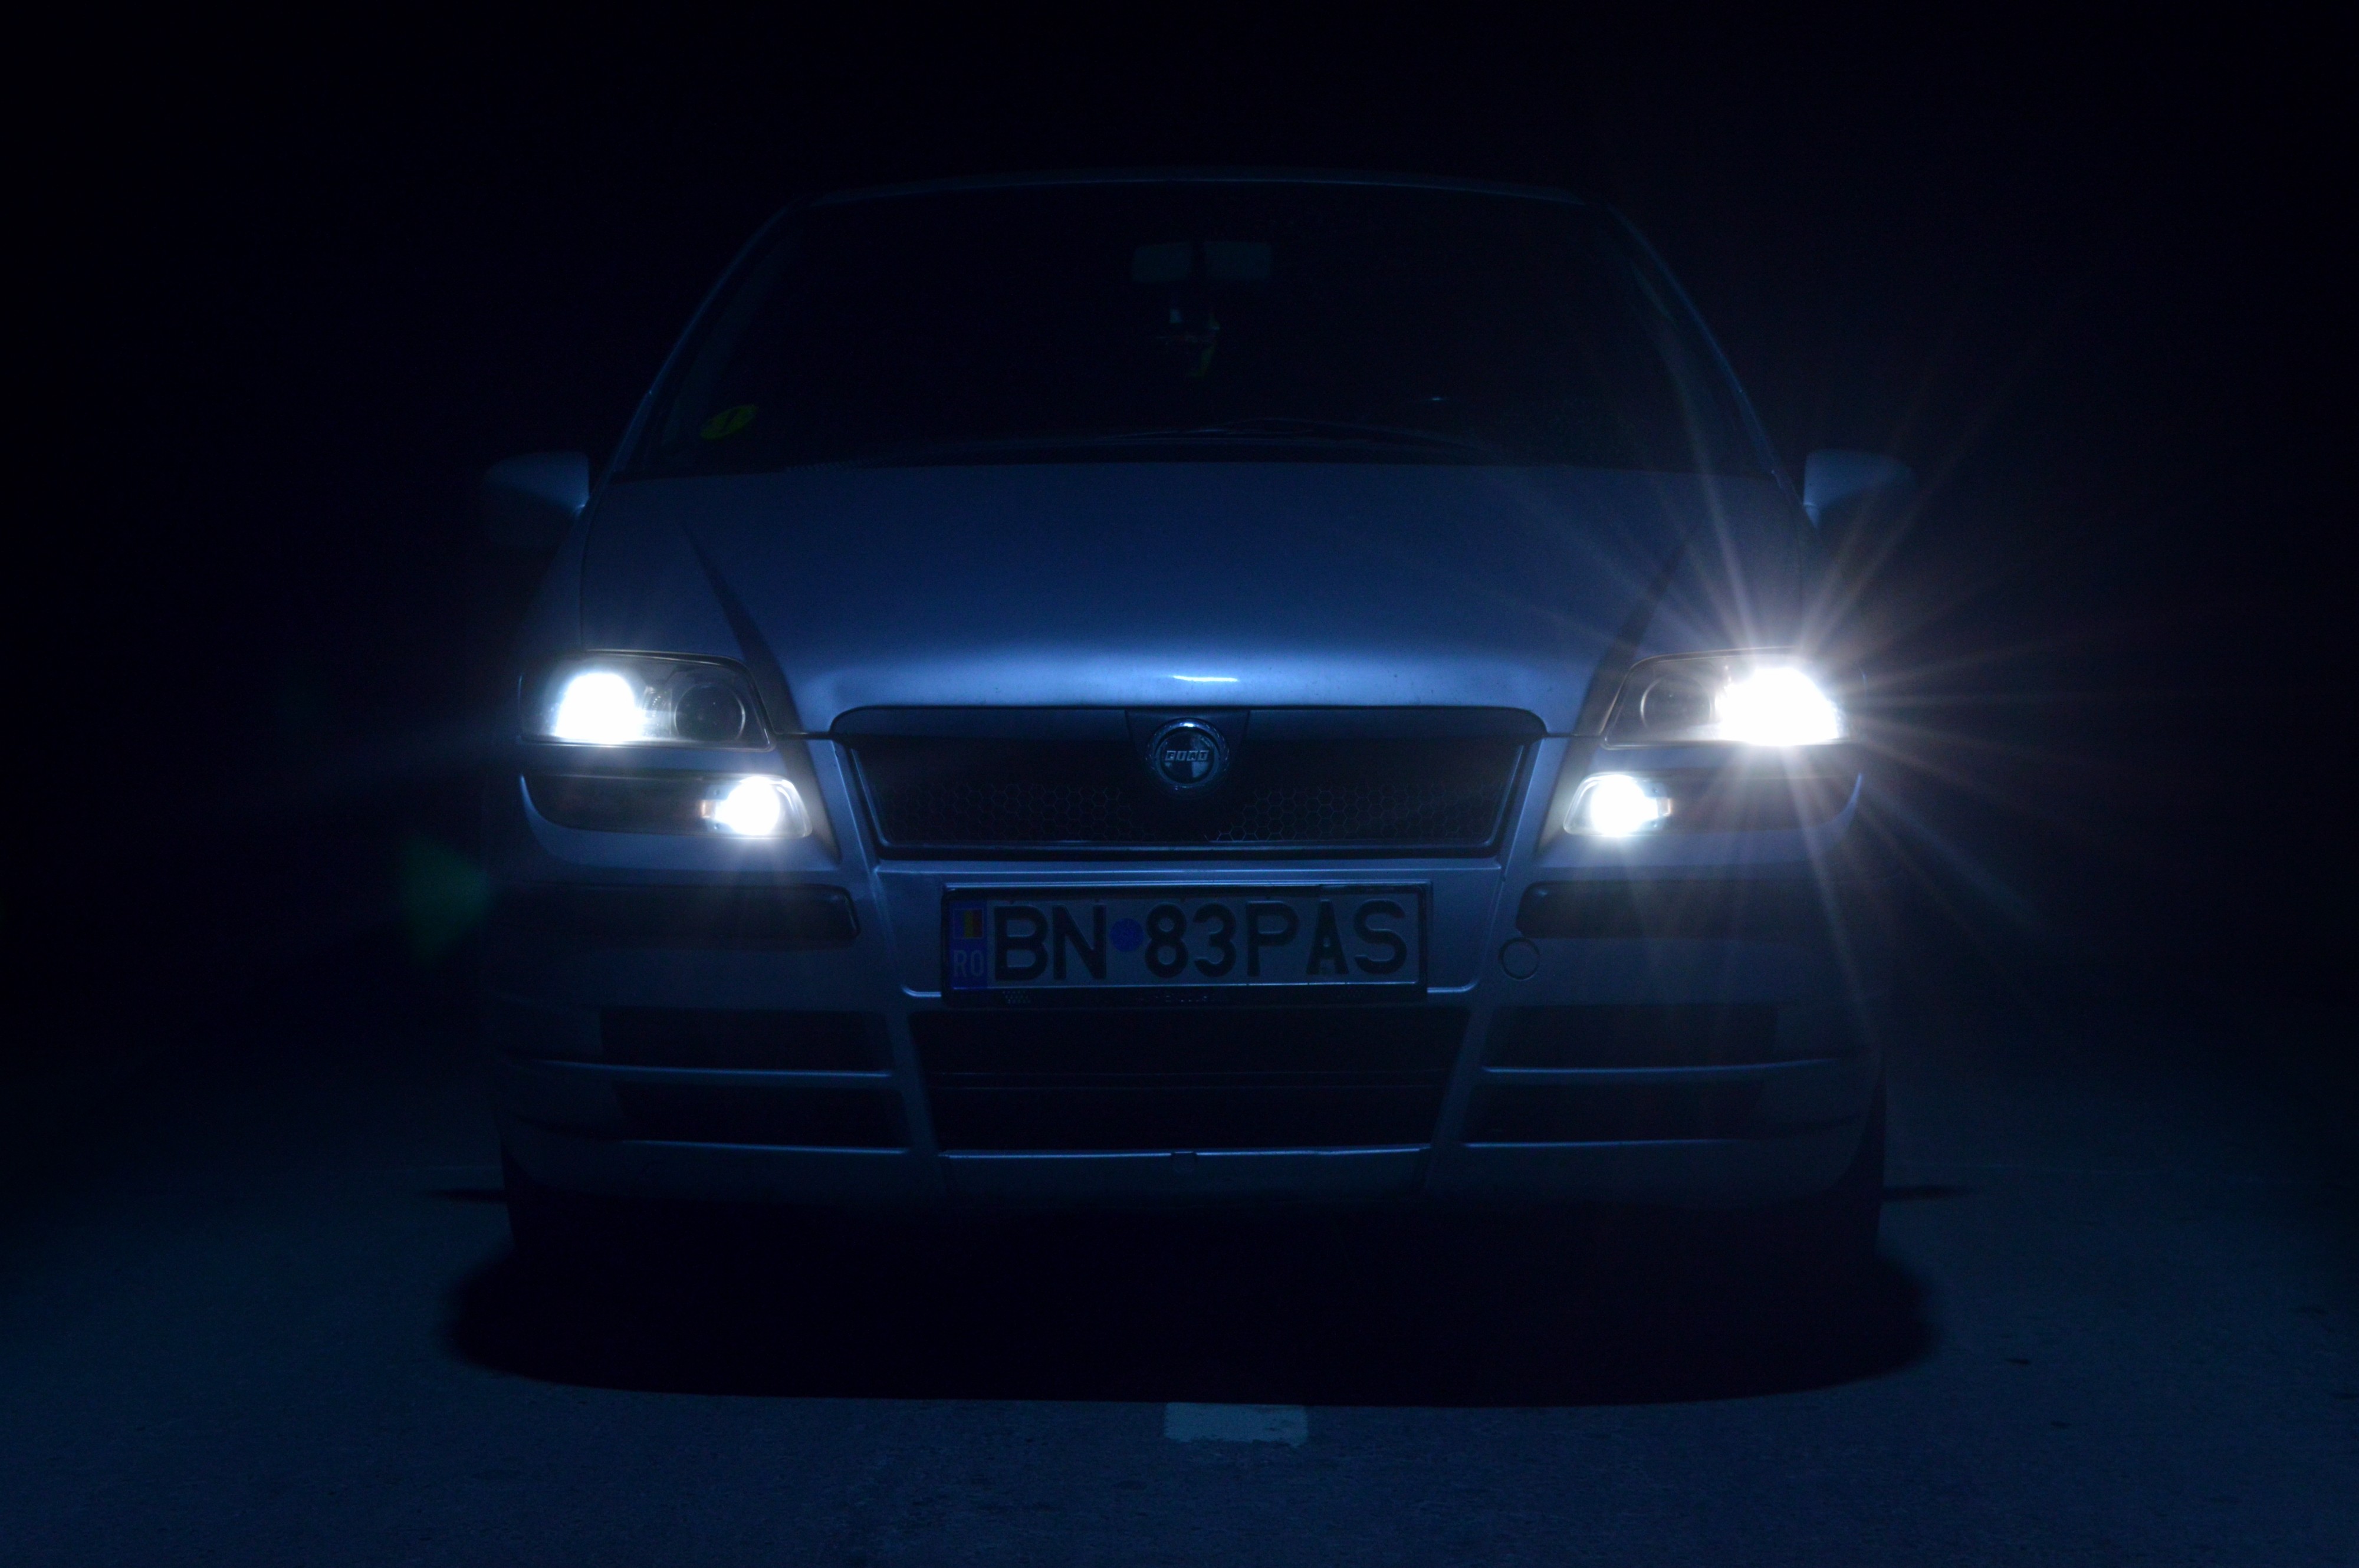 General 4000x2659 FIAT car night headlight beams Fiat Ulysse frontal view dark van vehicle italian cars Stellantis